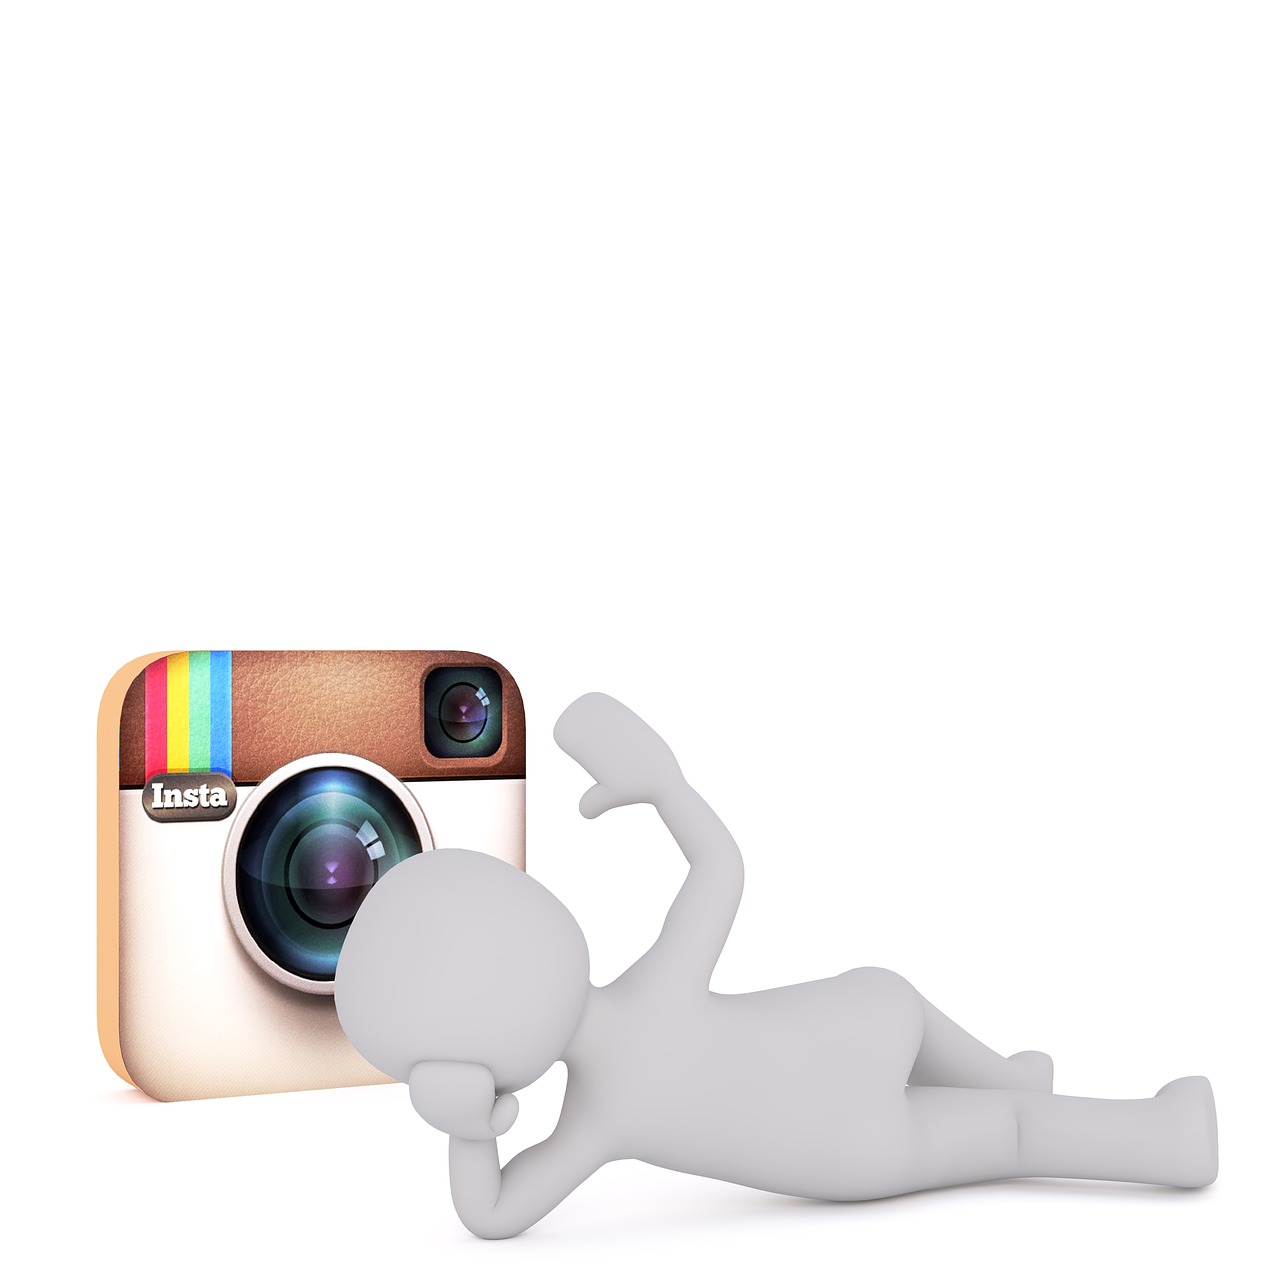 Instagram, Baltas Vyriškas, 3D Modelis, Izoliuotas, 3D, Modelis, Viso Kūno, Balta, 3D Vyras, App